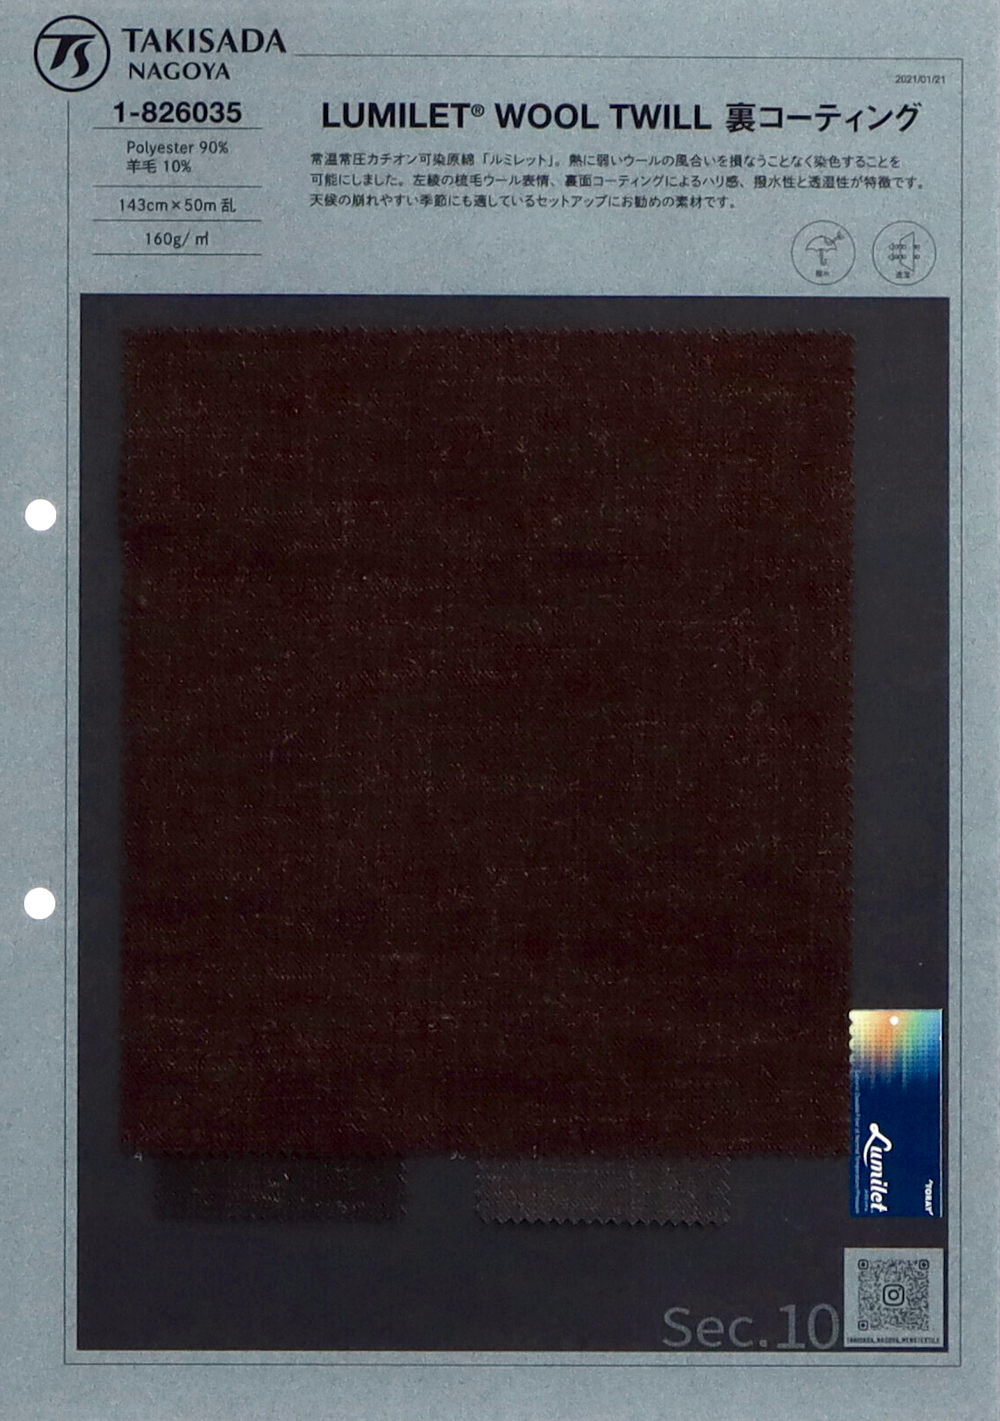 101-826035 LUMILET® WOOL TWILL Enduction Dorsale[Fabrication De Textile] Takisada Nagoya